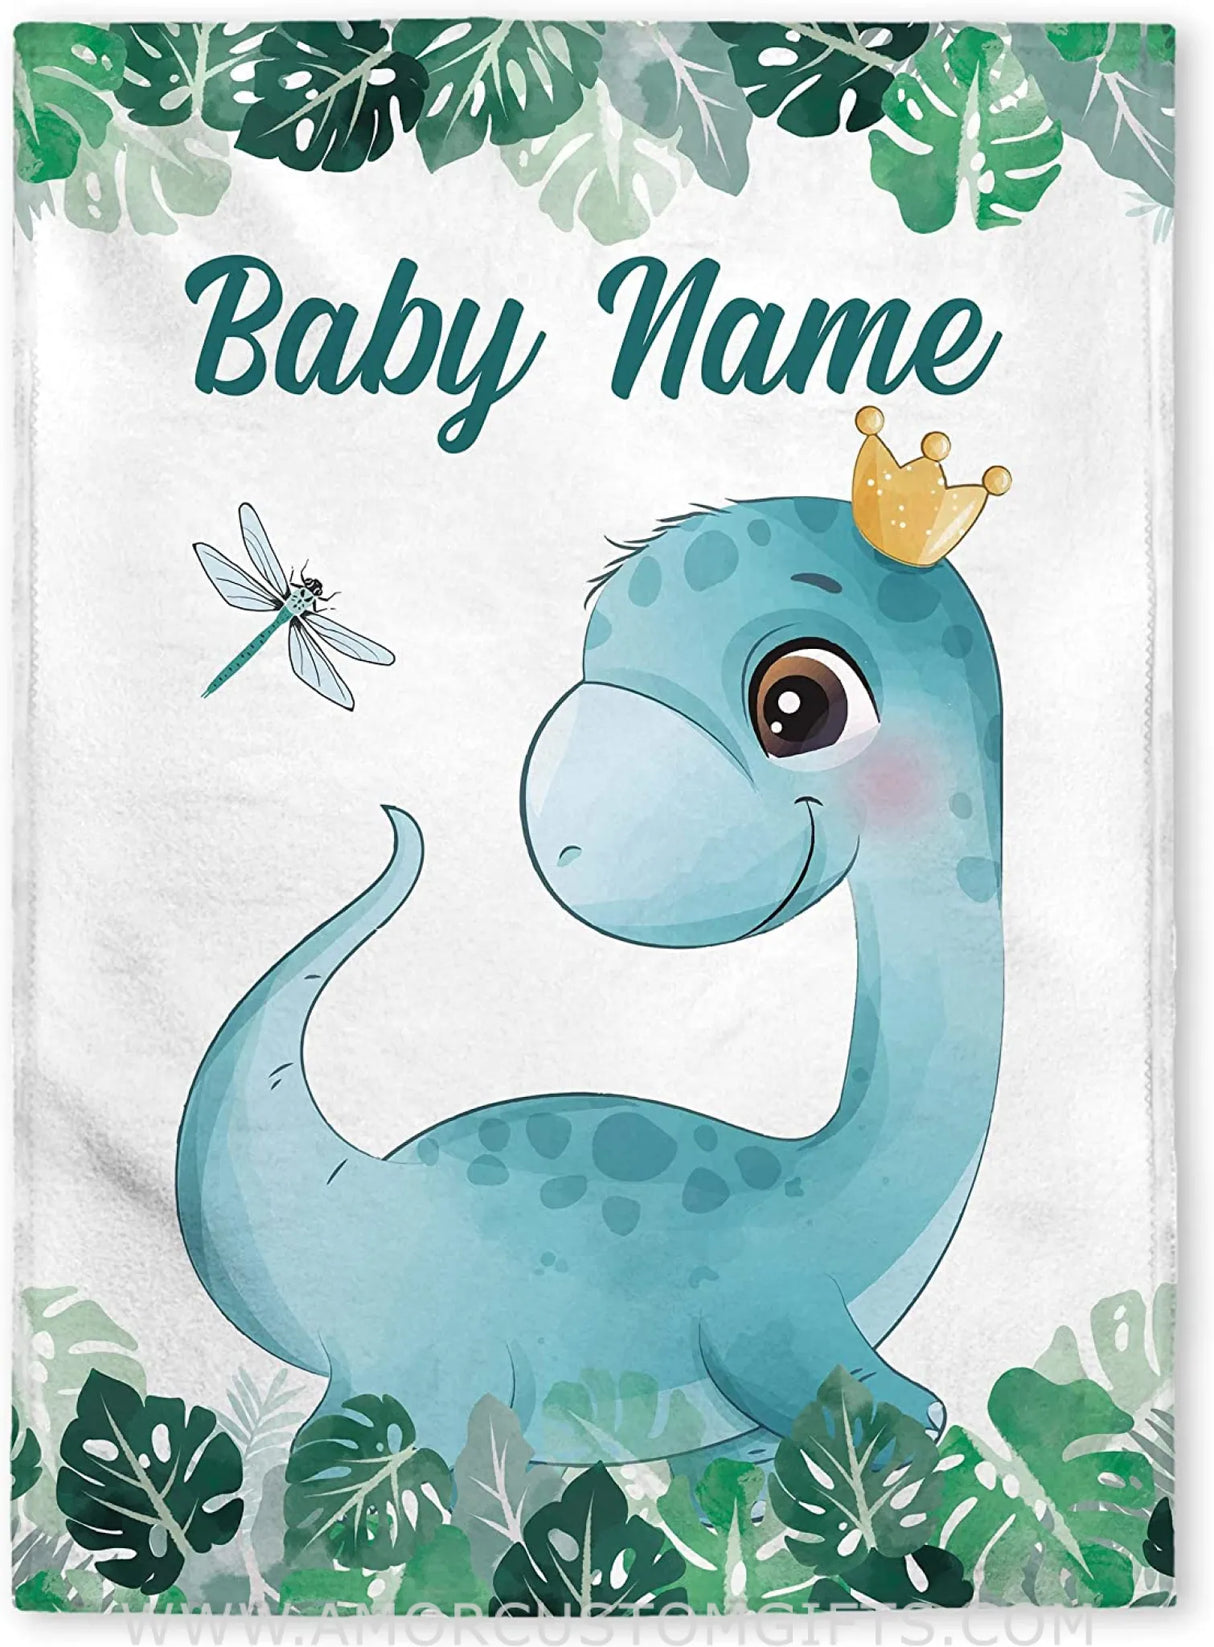 Blankets Personalized Baby Blankets, Custom Baby Blanket - Baby Blanket with Name for Boys, Best Gift for Baby, Newborn Dinosaur Flush Fleece